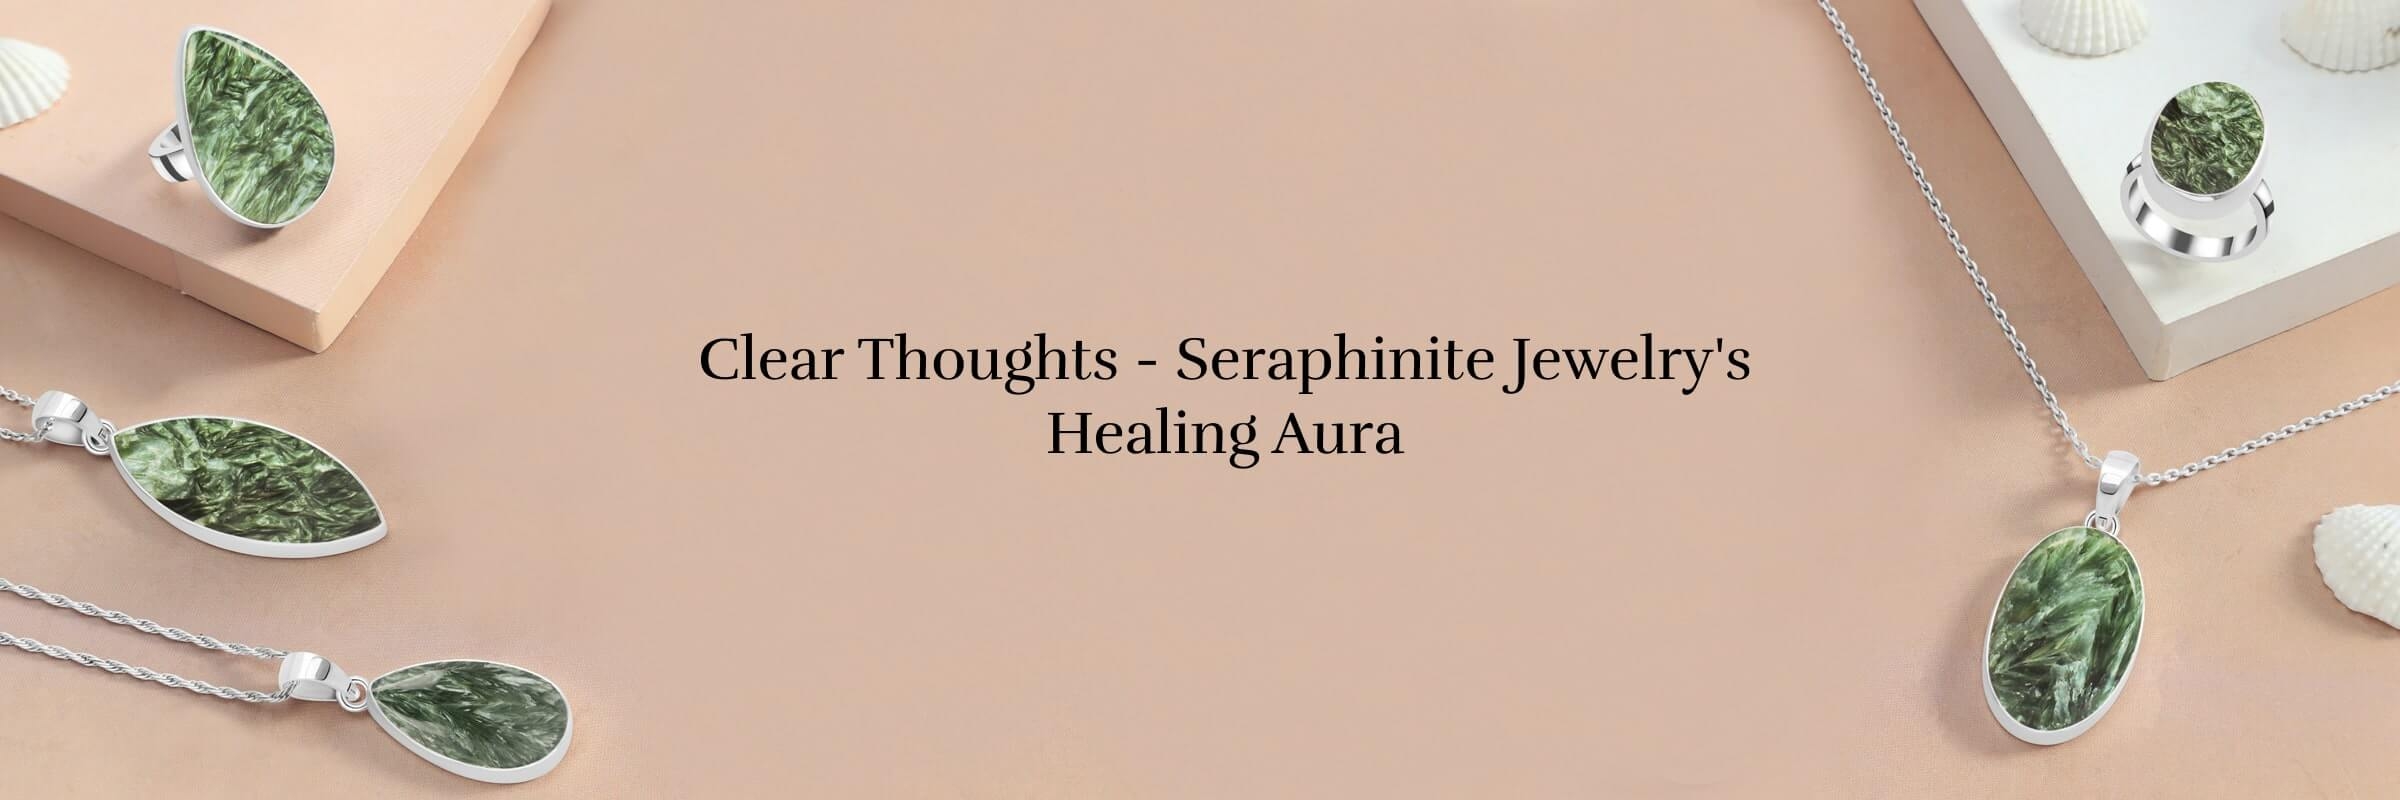 Seraphinite Jewelry: Mental Healing Properties